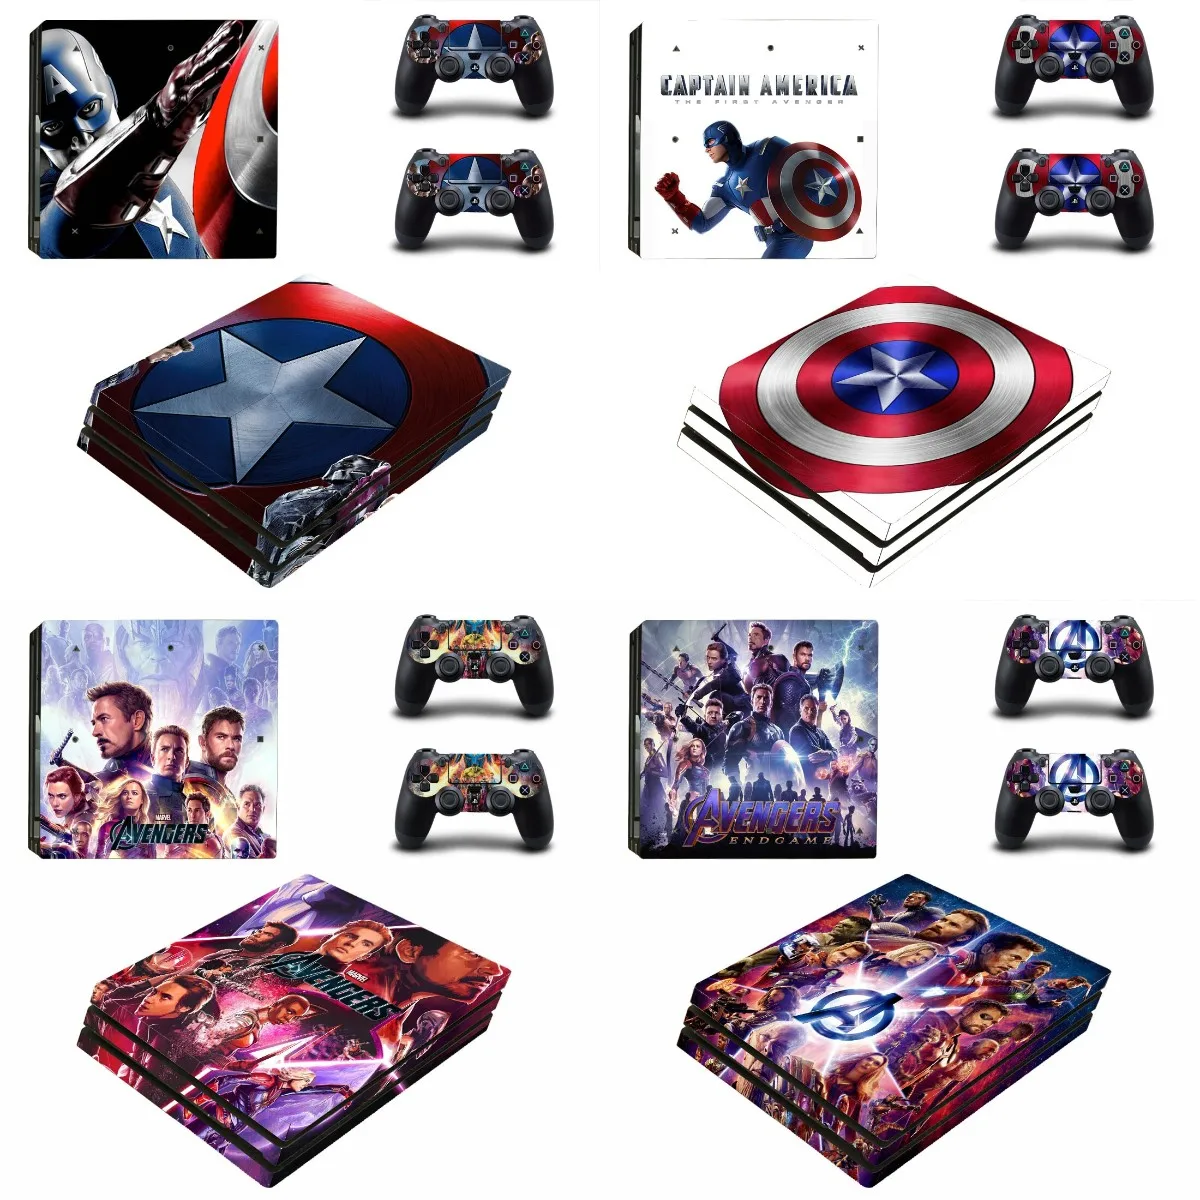 Avengers Cilt Sticker Oyun Konsolu koruyucu film için PS4pro PS4 Pro Konsolu ve 2 Oyun Kontrolörleri PS4 Pro Cilt Sticker . ' - ' . 0